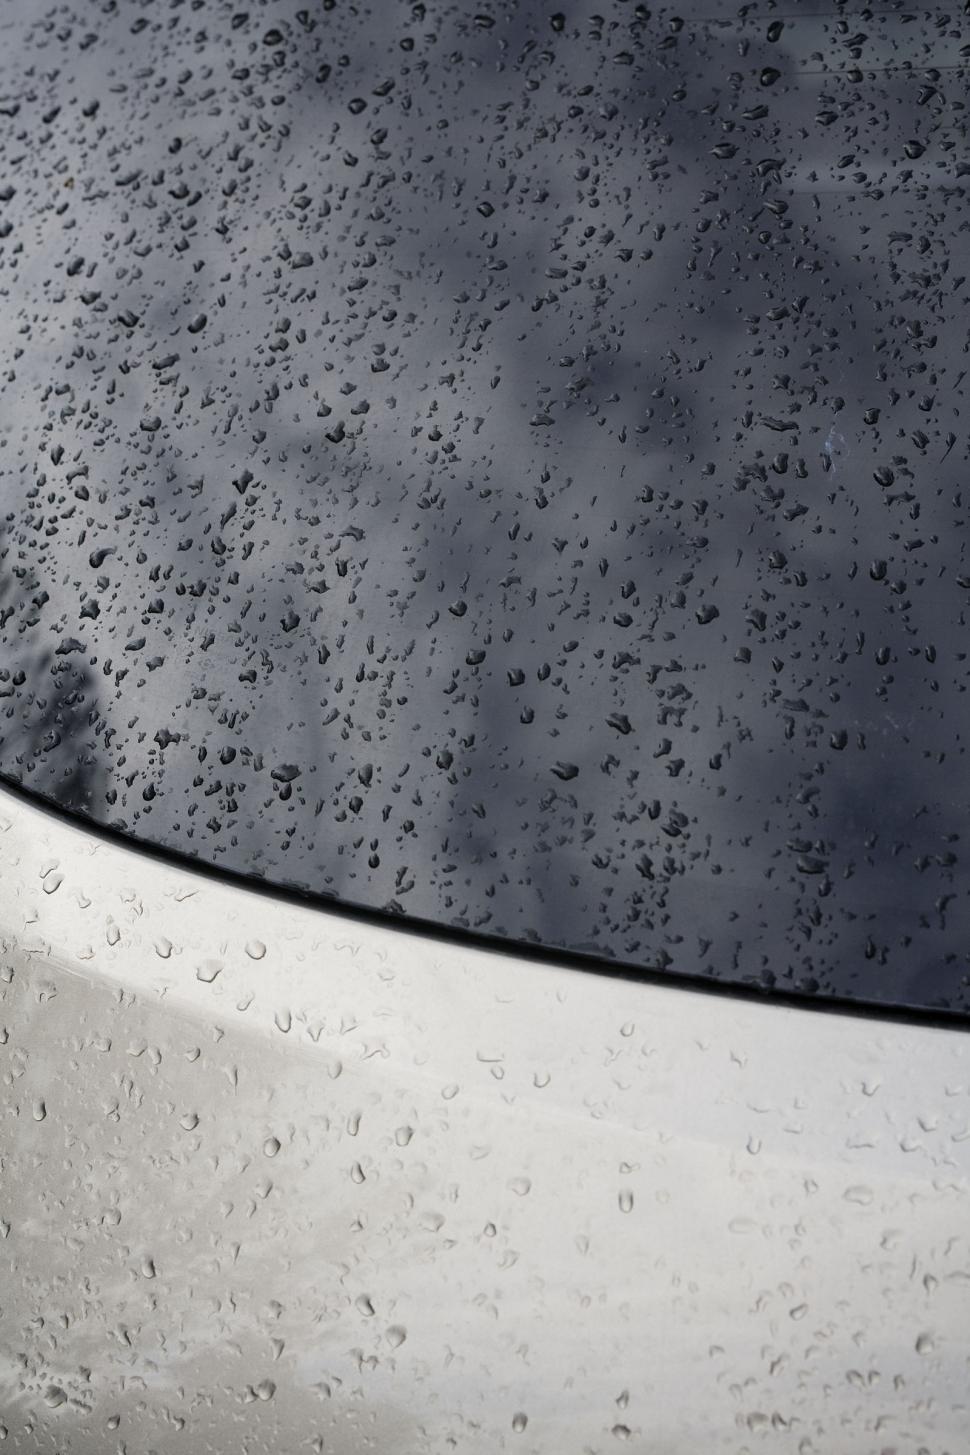 Free Image of Raindrops on the car window 